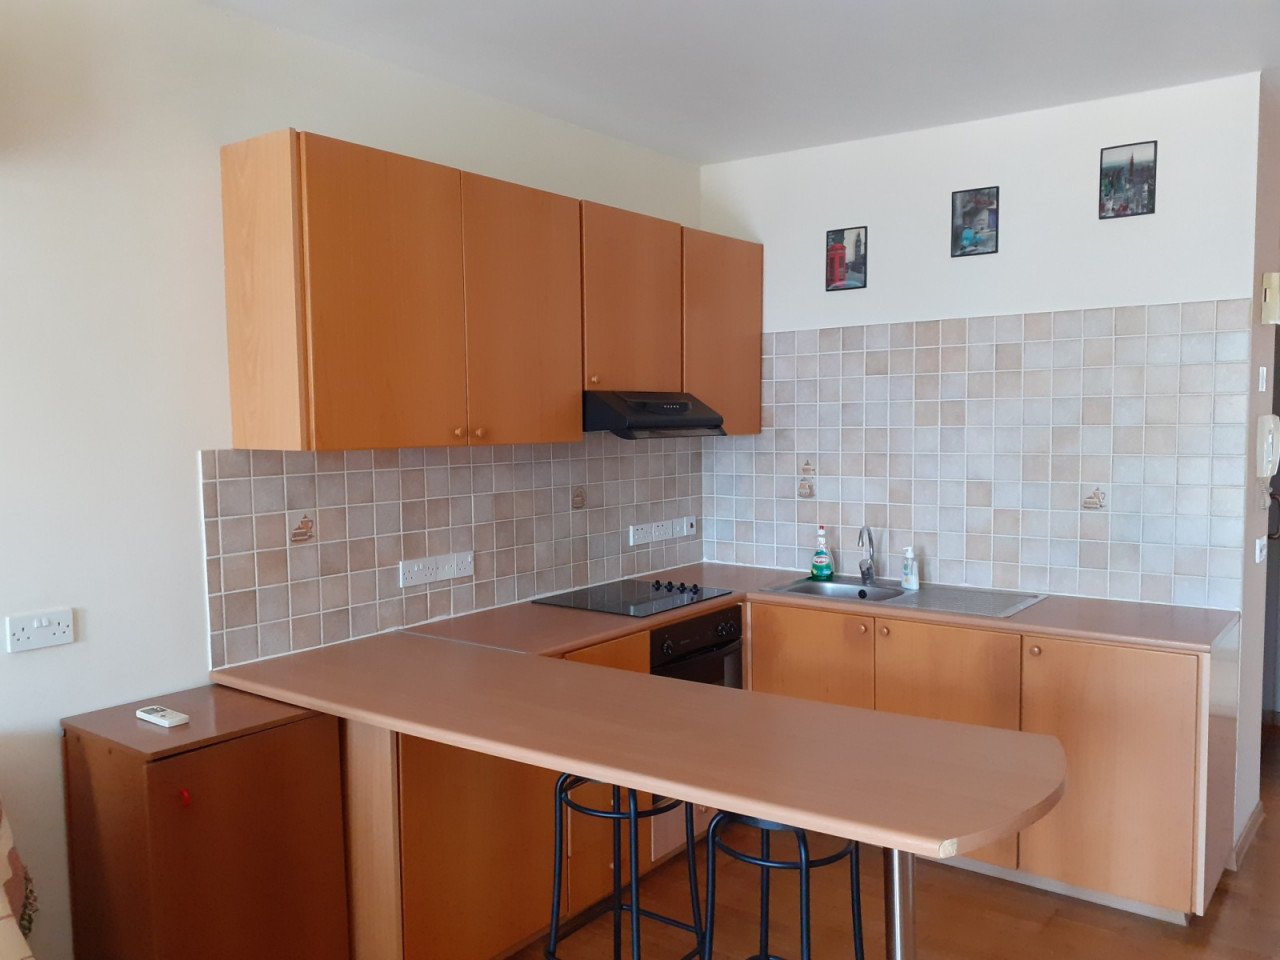 For Sale: Apartment (Studio) in Aglantzia, Nicosia for Rent | Key Realtor Cyprus